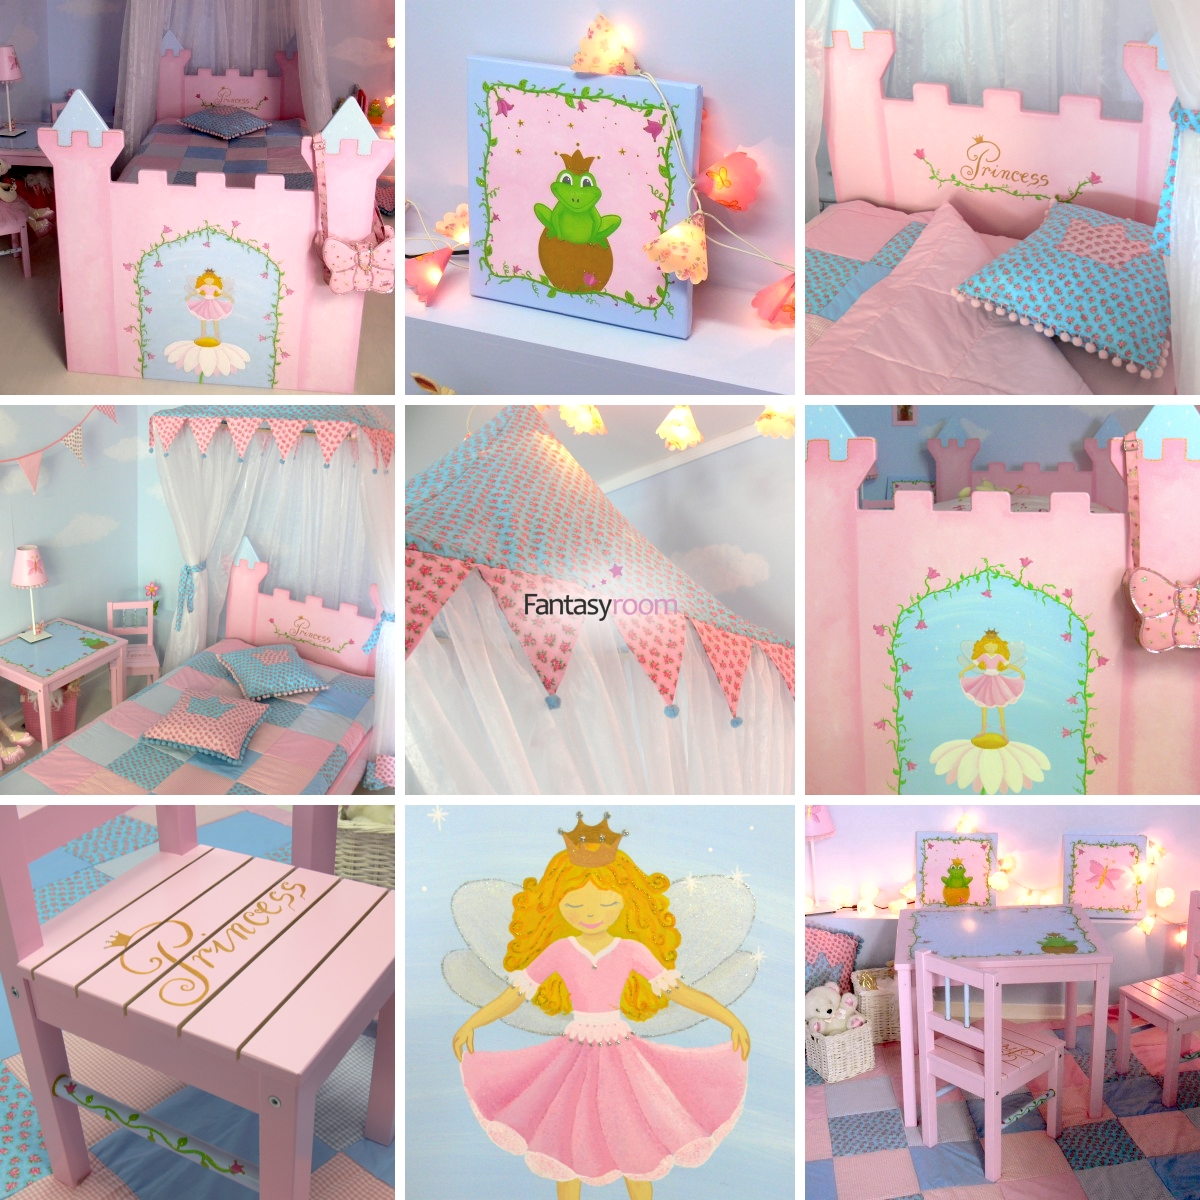 Fantasyroom Prinzessinnenmöbel in Rosa und Hellblau